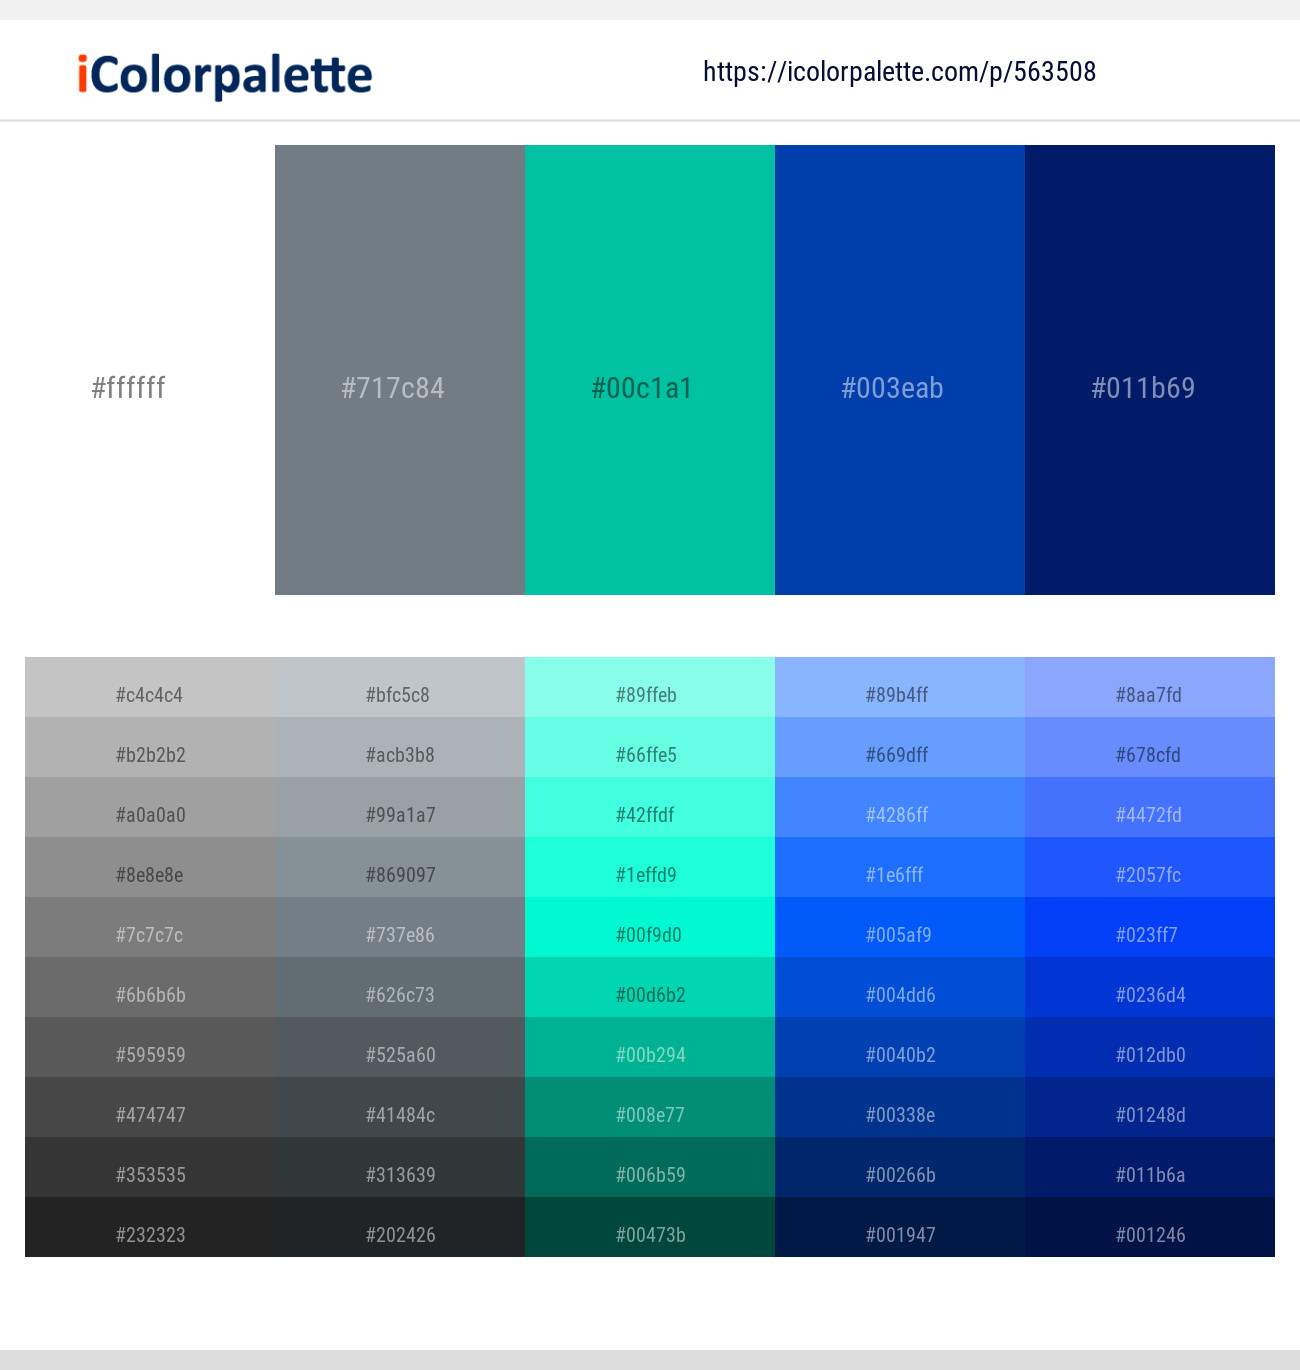 cobalt blue vs navy blue - Google Search